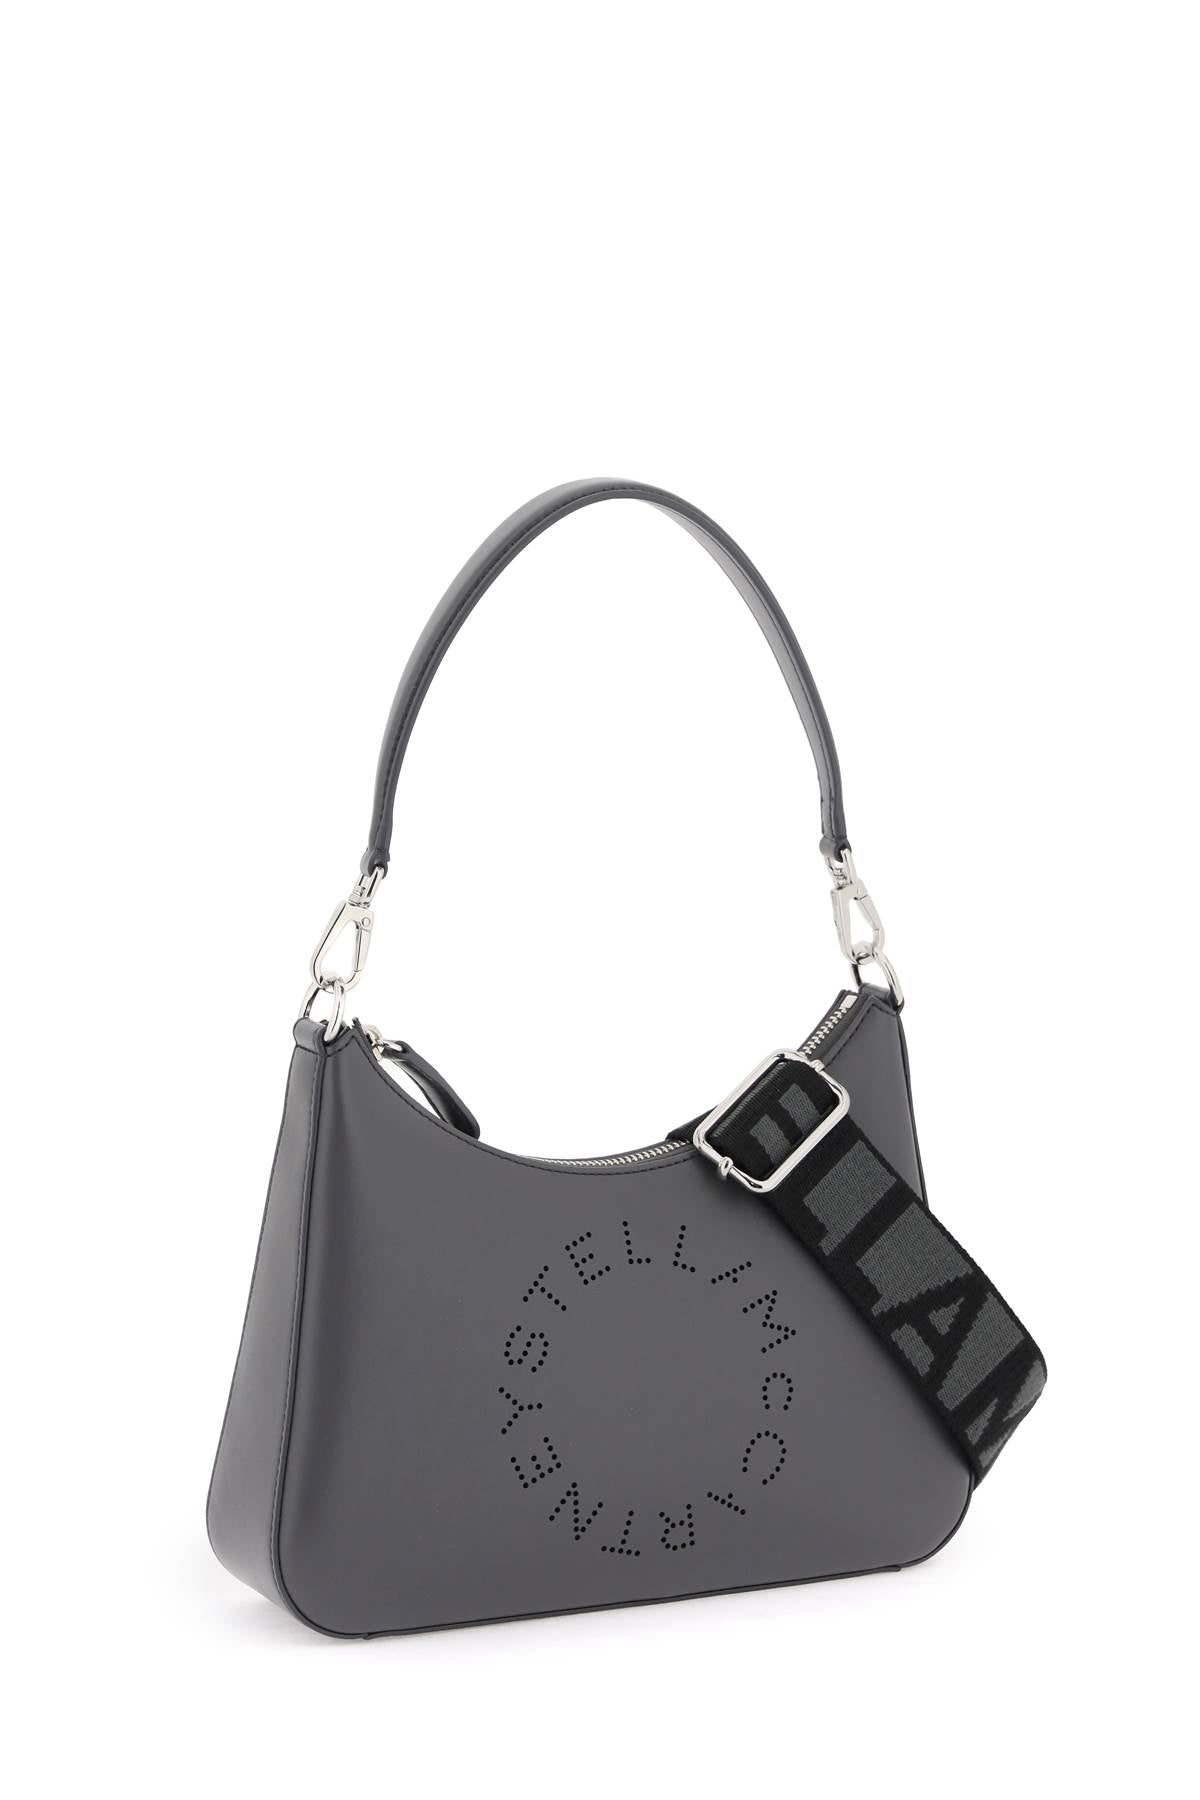 STELLA MCCARTNEY Small Gray Logo Shoulder Handbag with Convertible Crossbody Strap